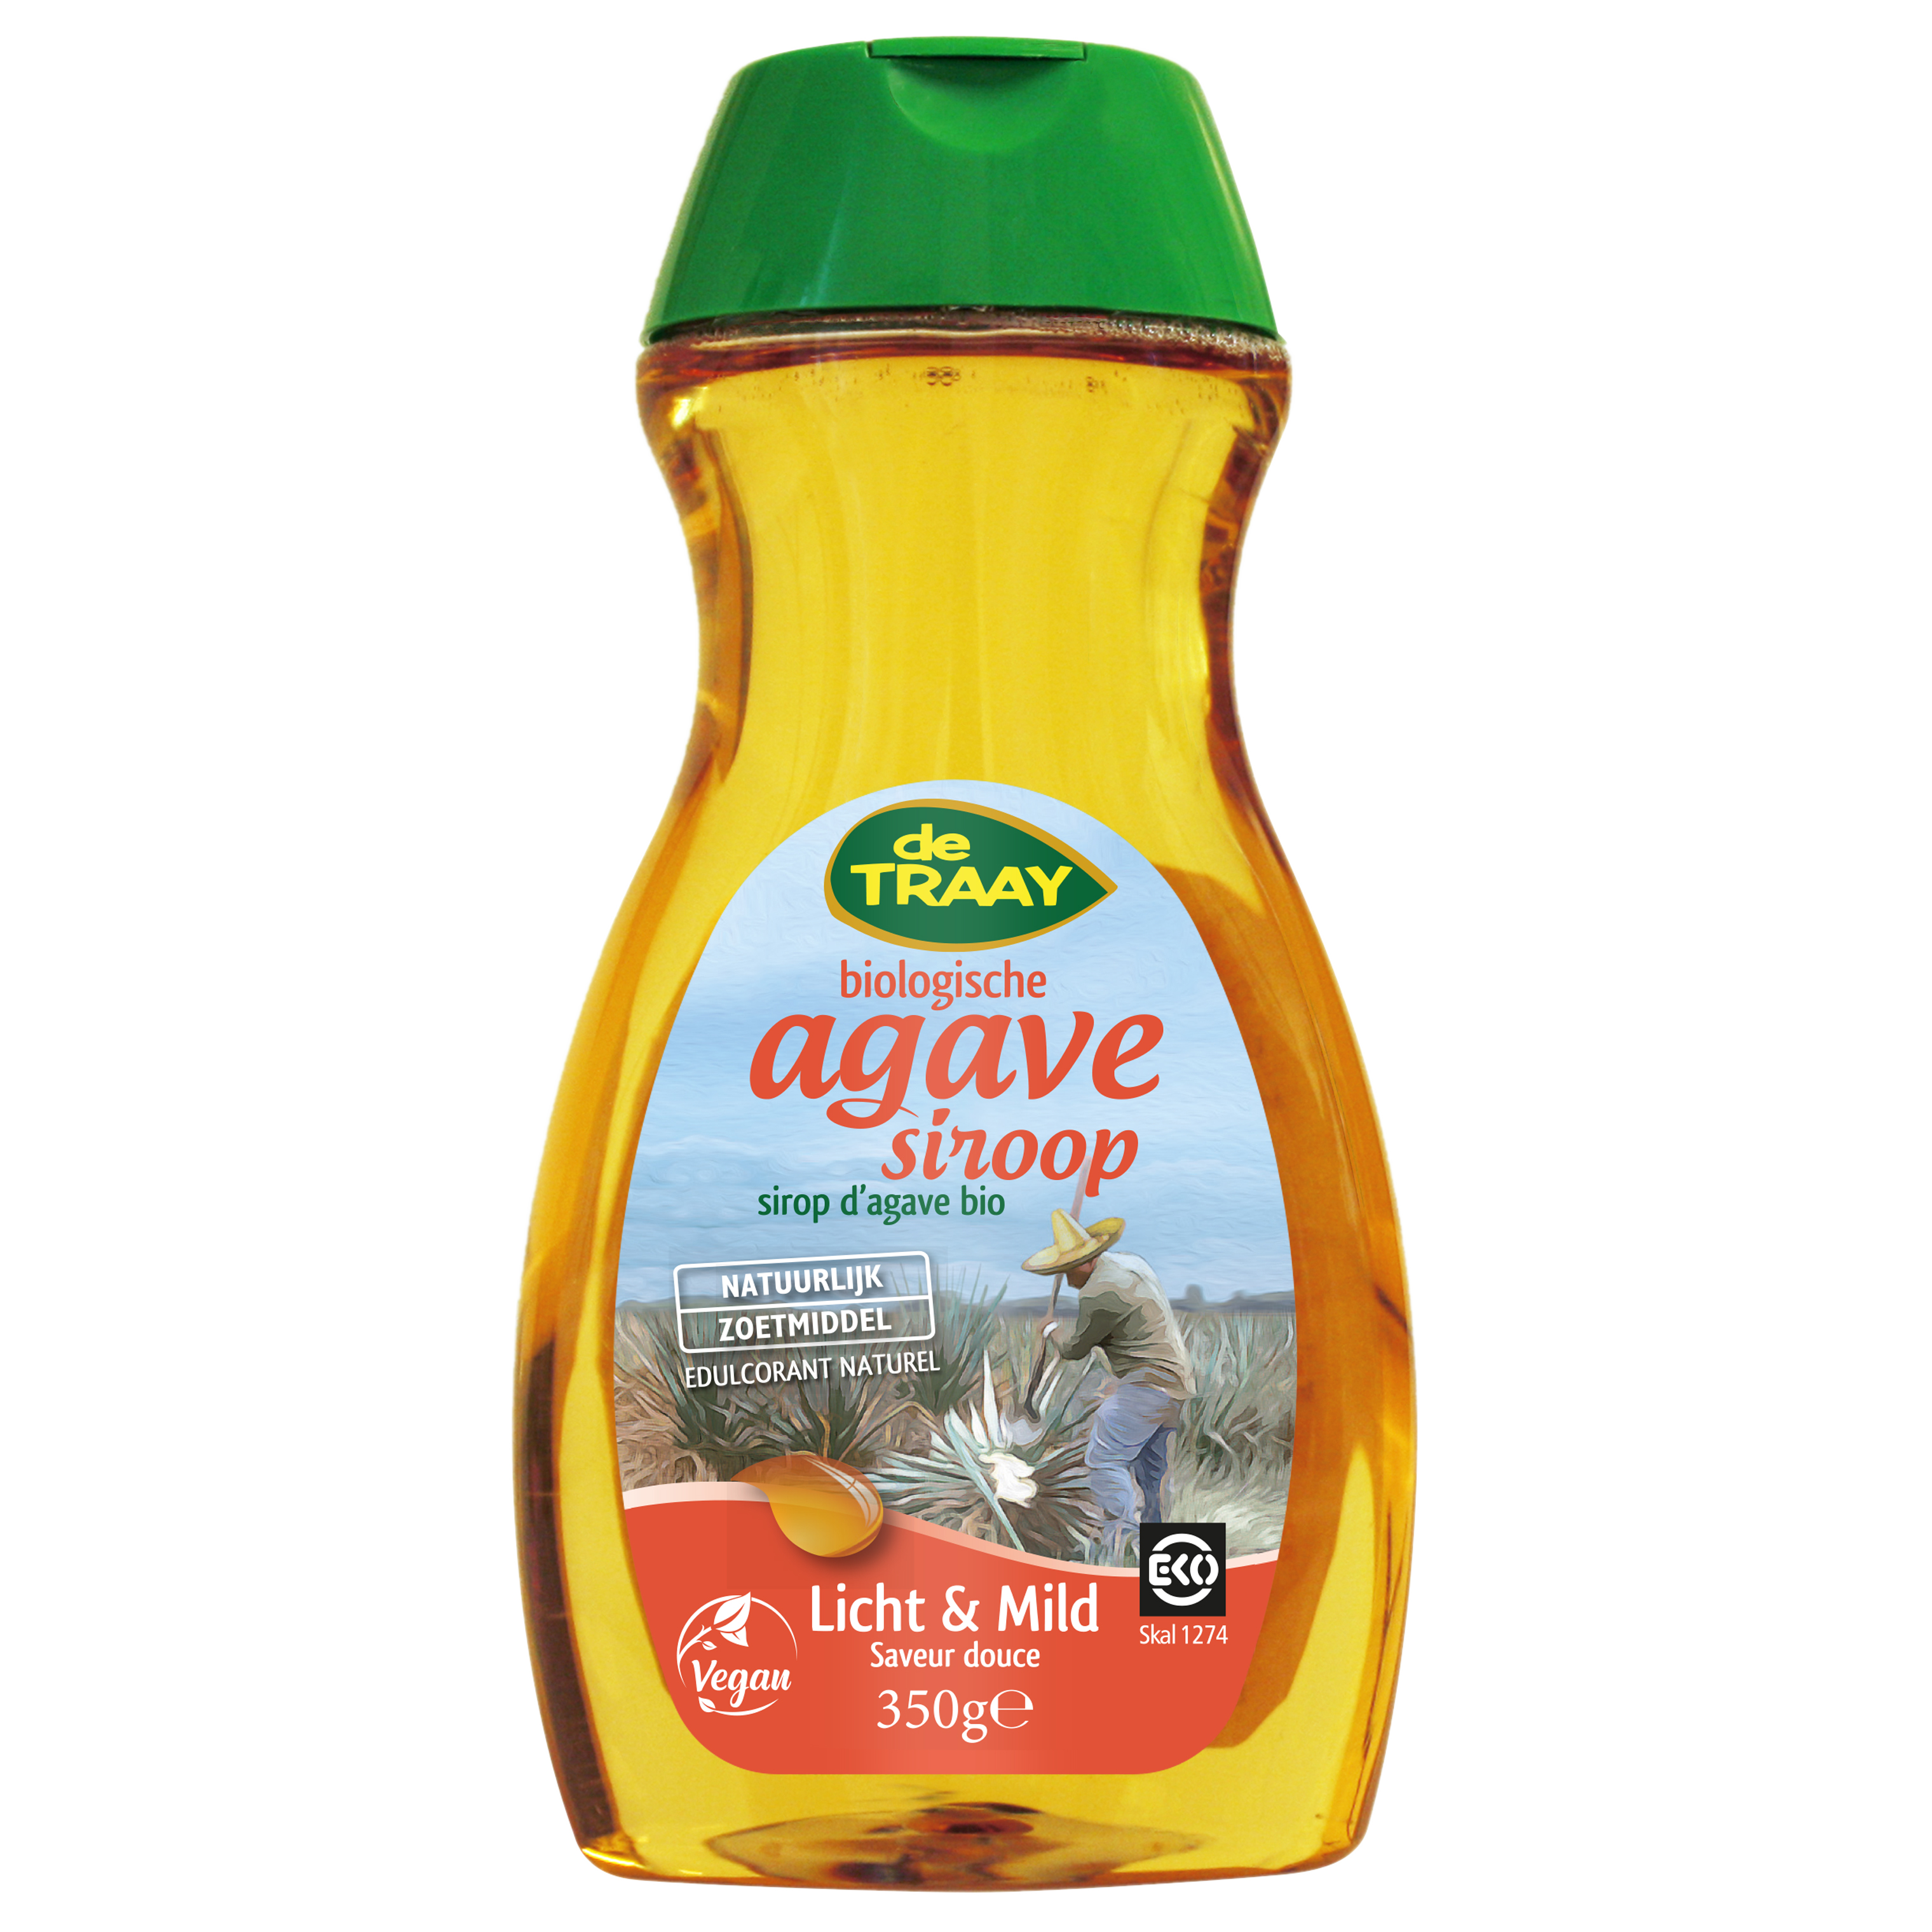 Organic agave syrup - light & mild